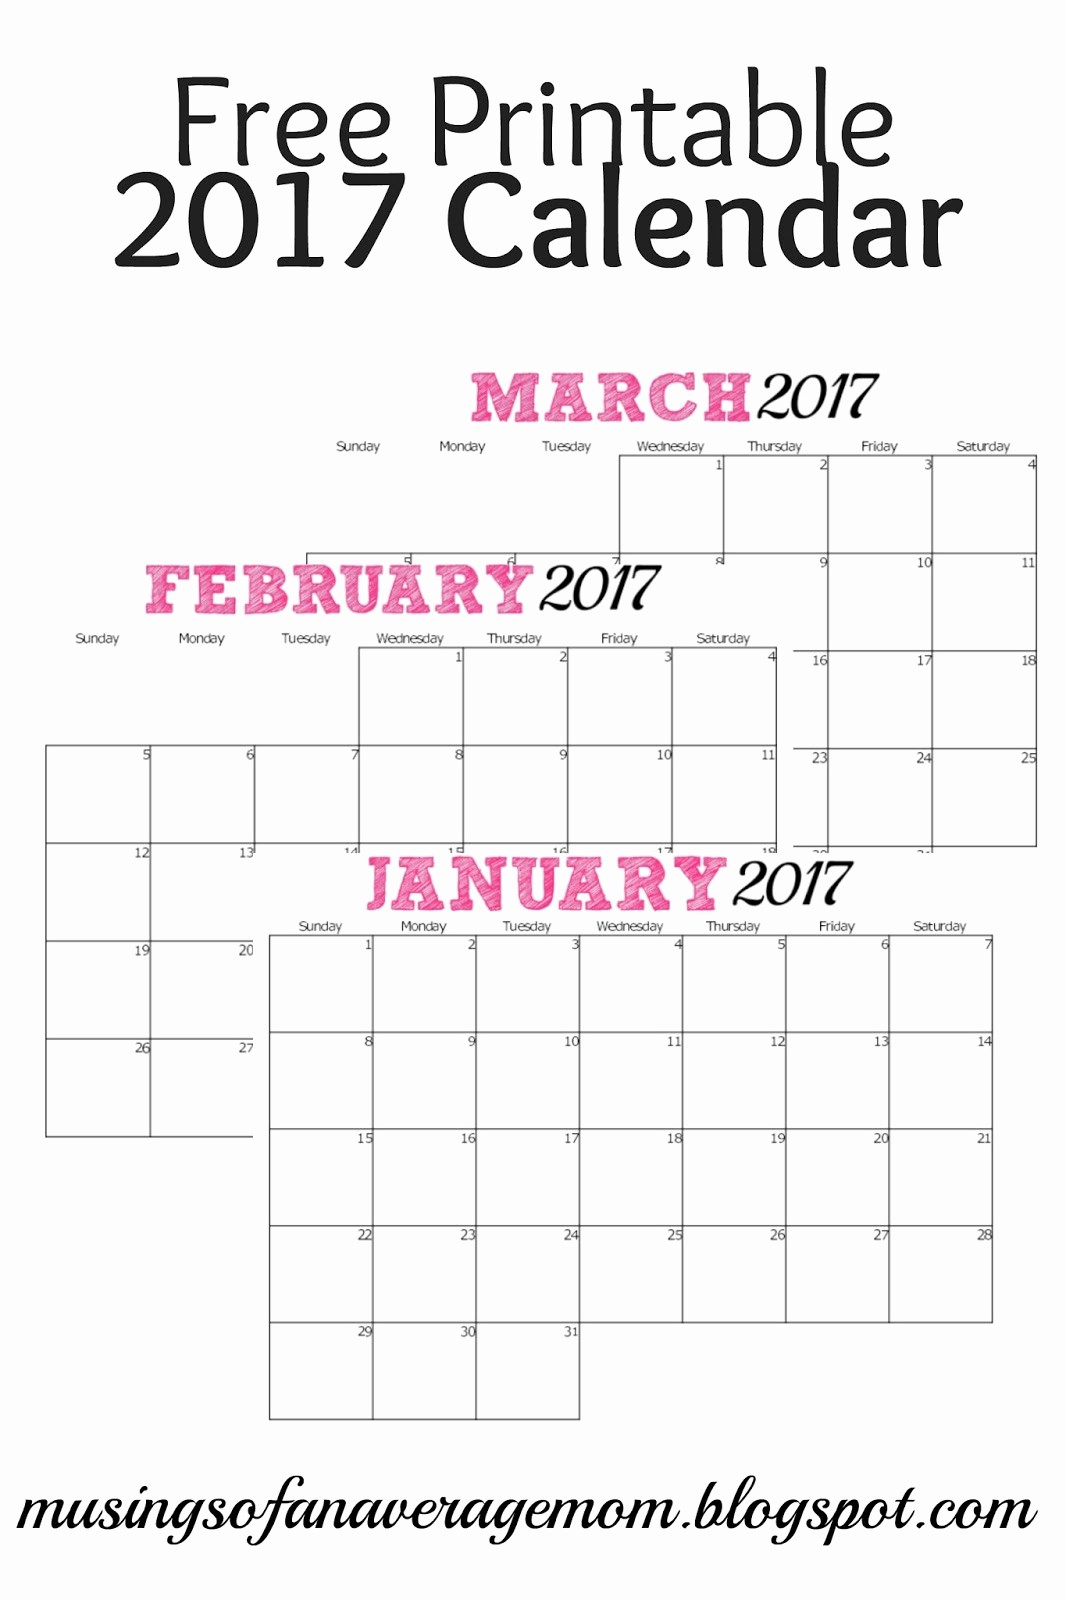 Free Printable Quarterly Calendar 2017 Unique Musings Of An Average Mom 2017 Monthly Calendars